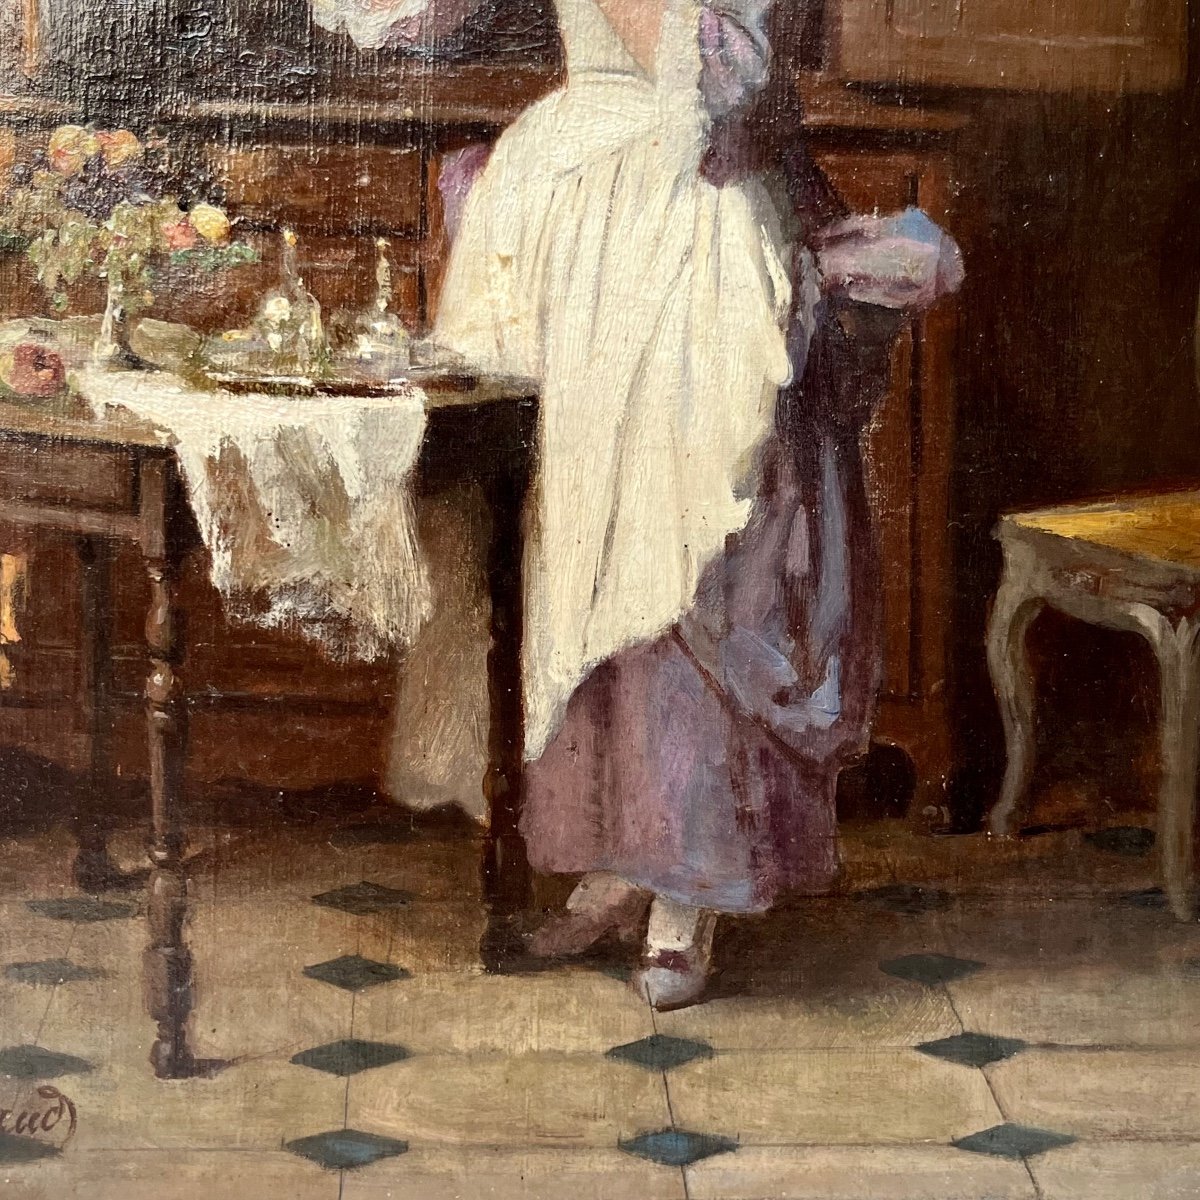 Joseph Caraud (1821 - 1905) Preparing An Aperitif In The Kitchen - Oil On Canvas-photo-6